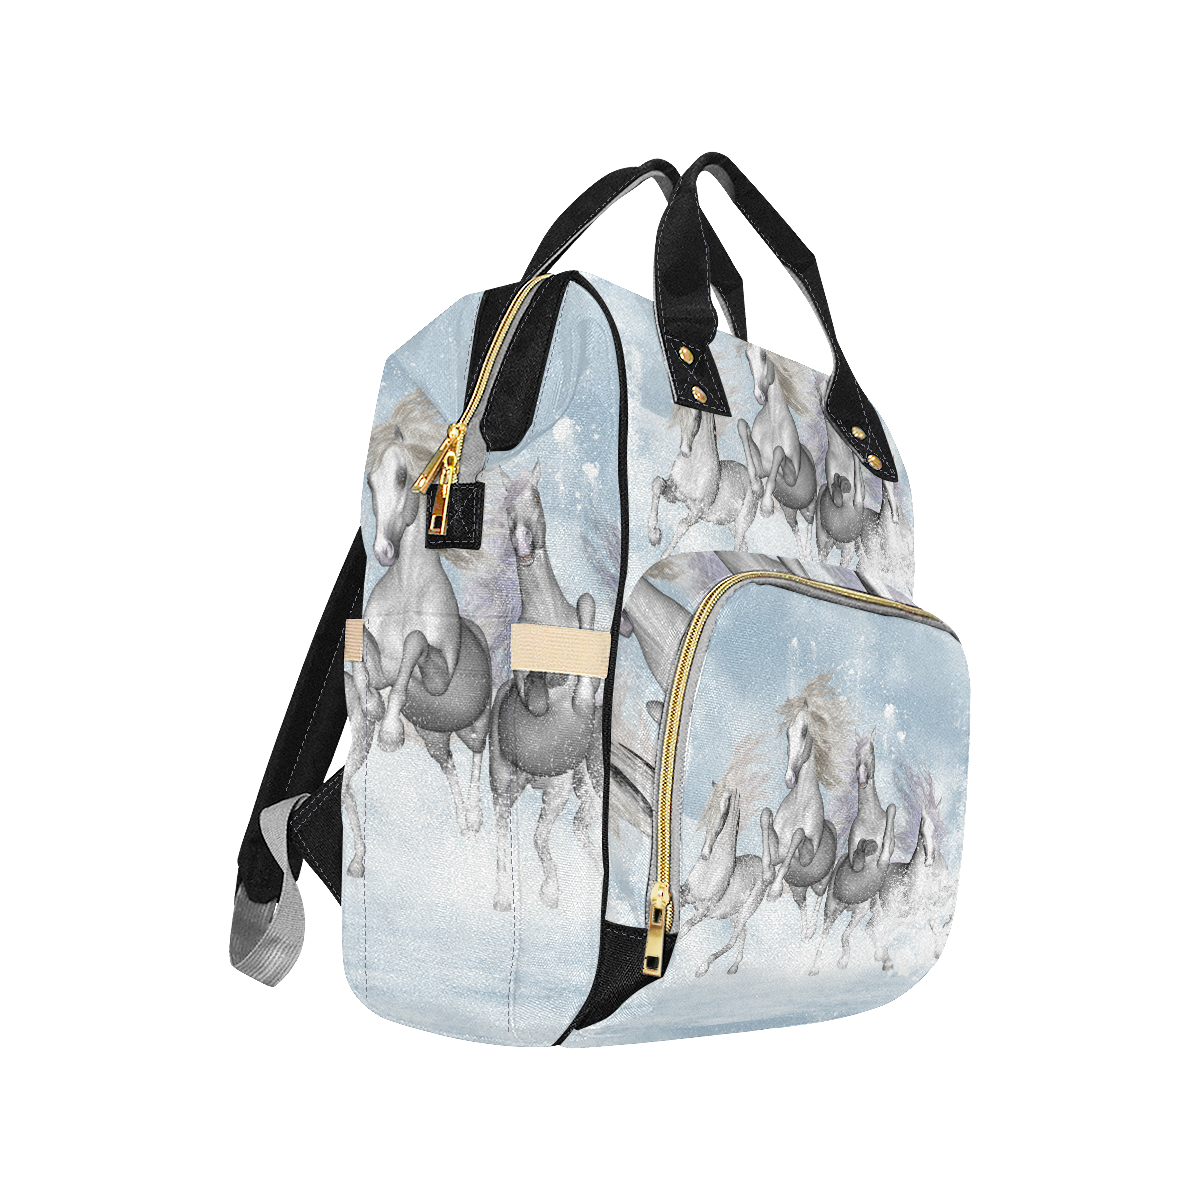 Awesome white wild horses Multi-Function Diaper Backpack/Diaper Bag (Model 1688)